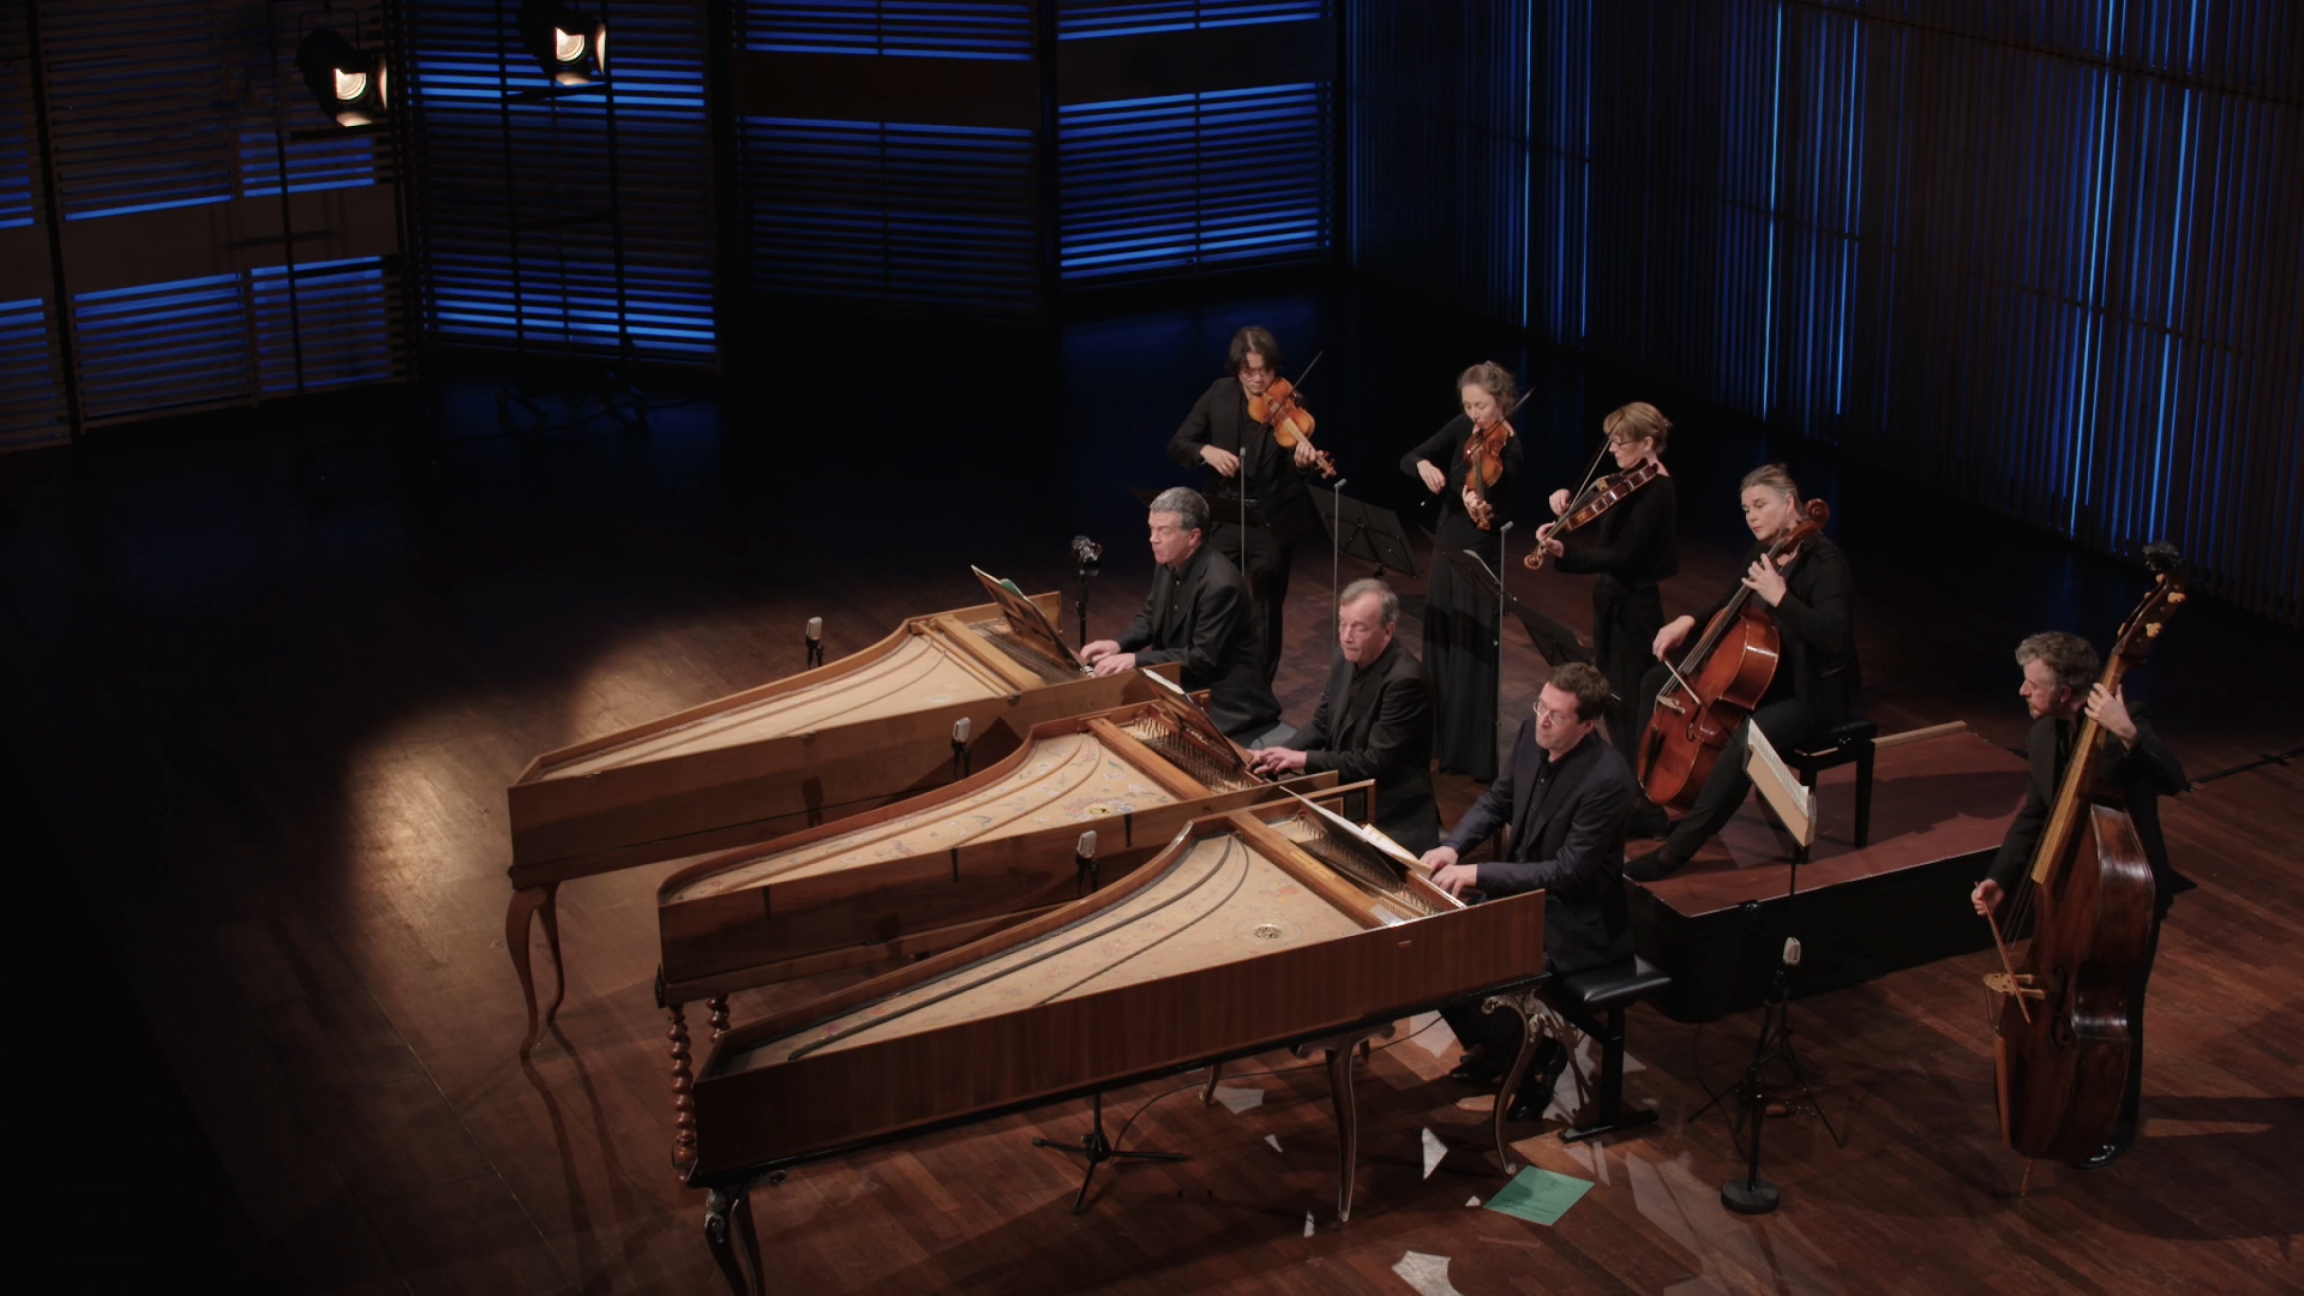 Concerto for three harpsichords in C major